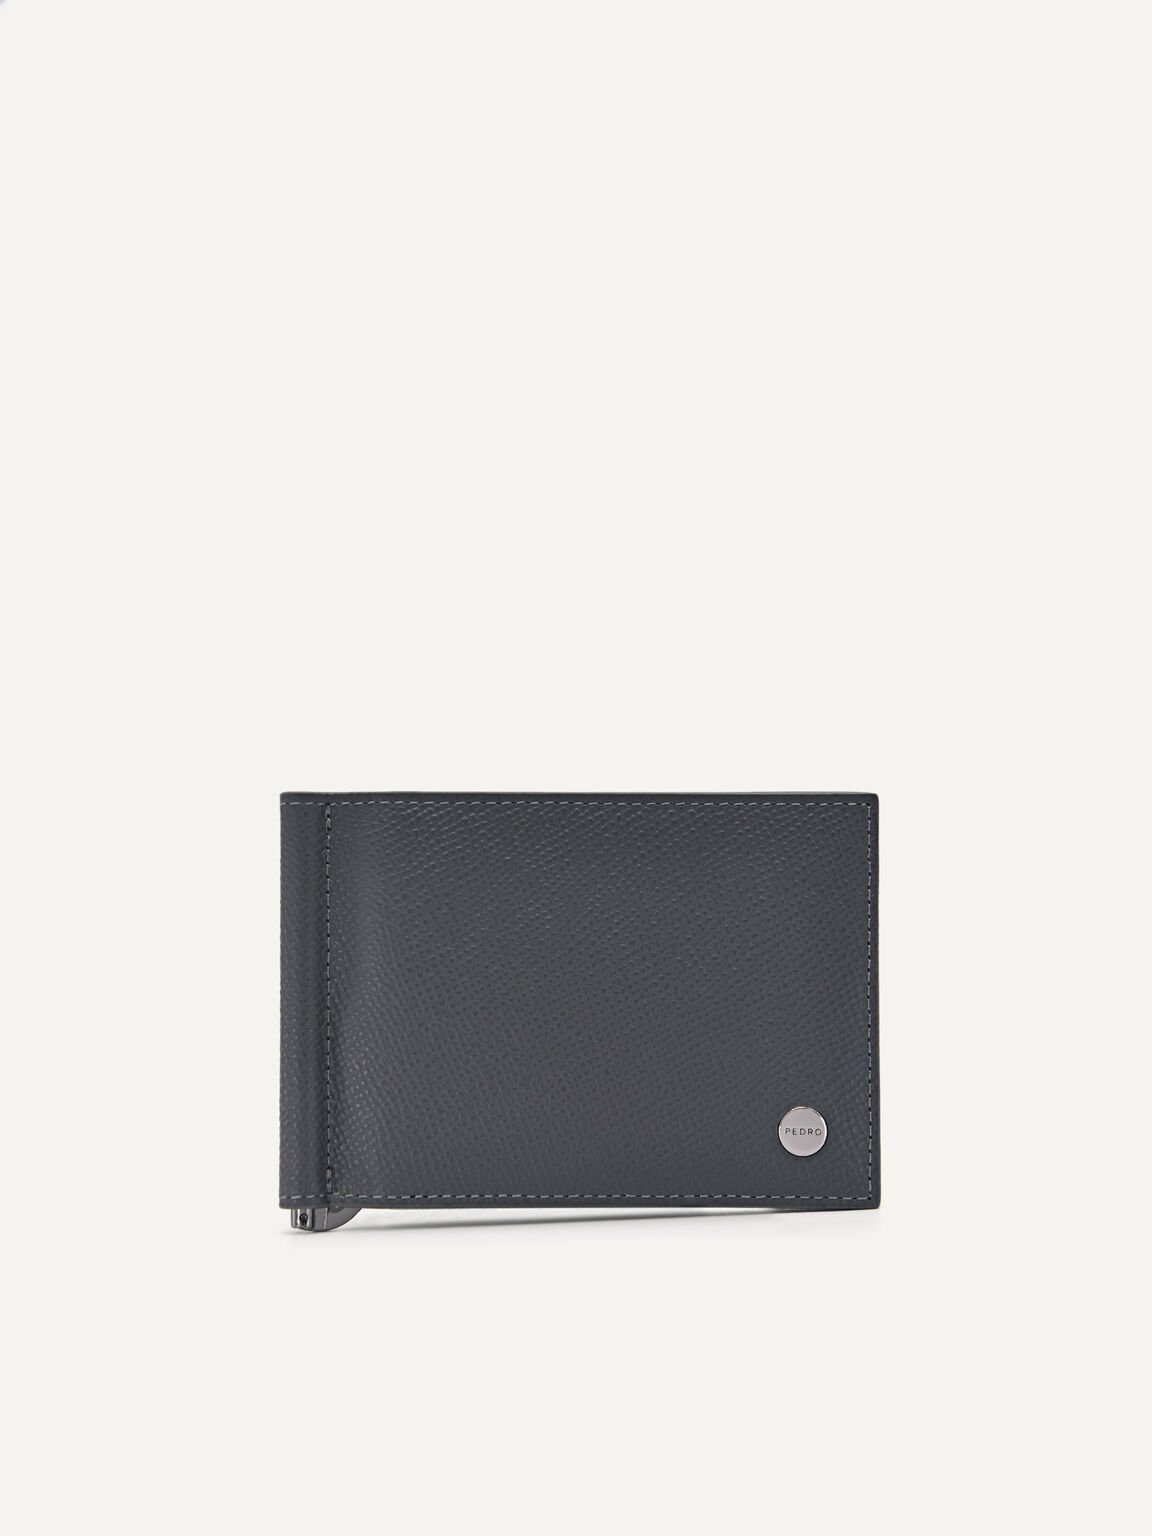 Oliver Leather Bi-Fold Card Holder with Money Clip, Dark Grey